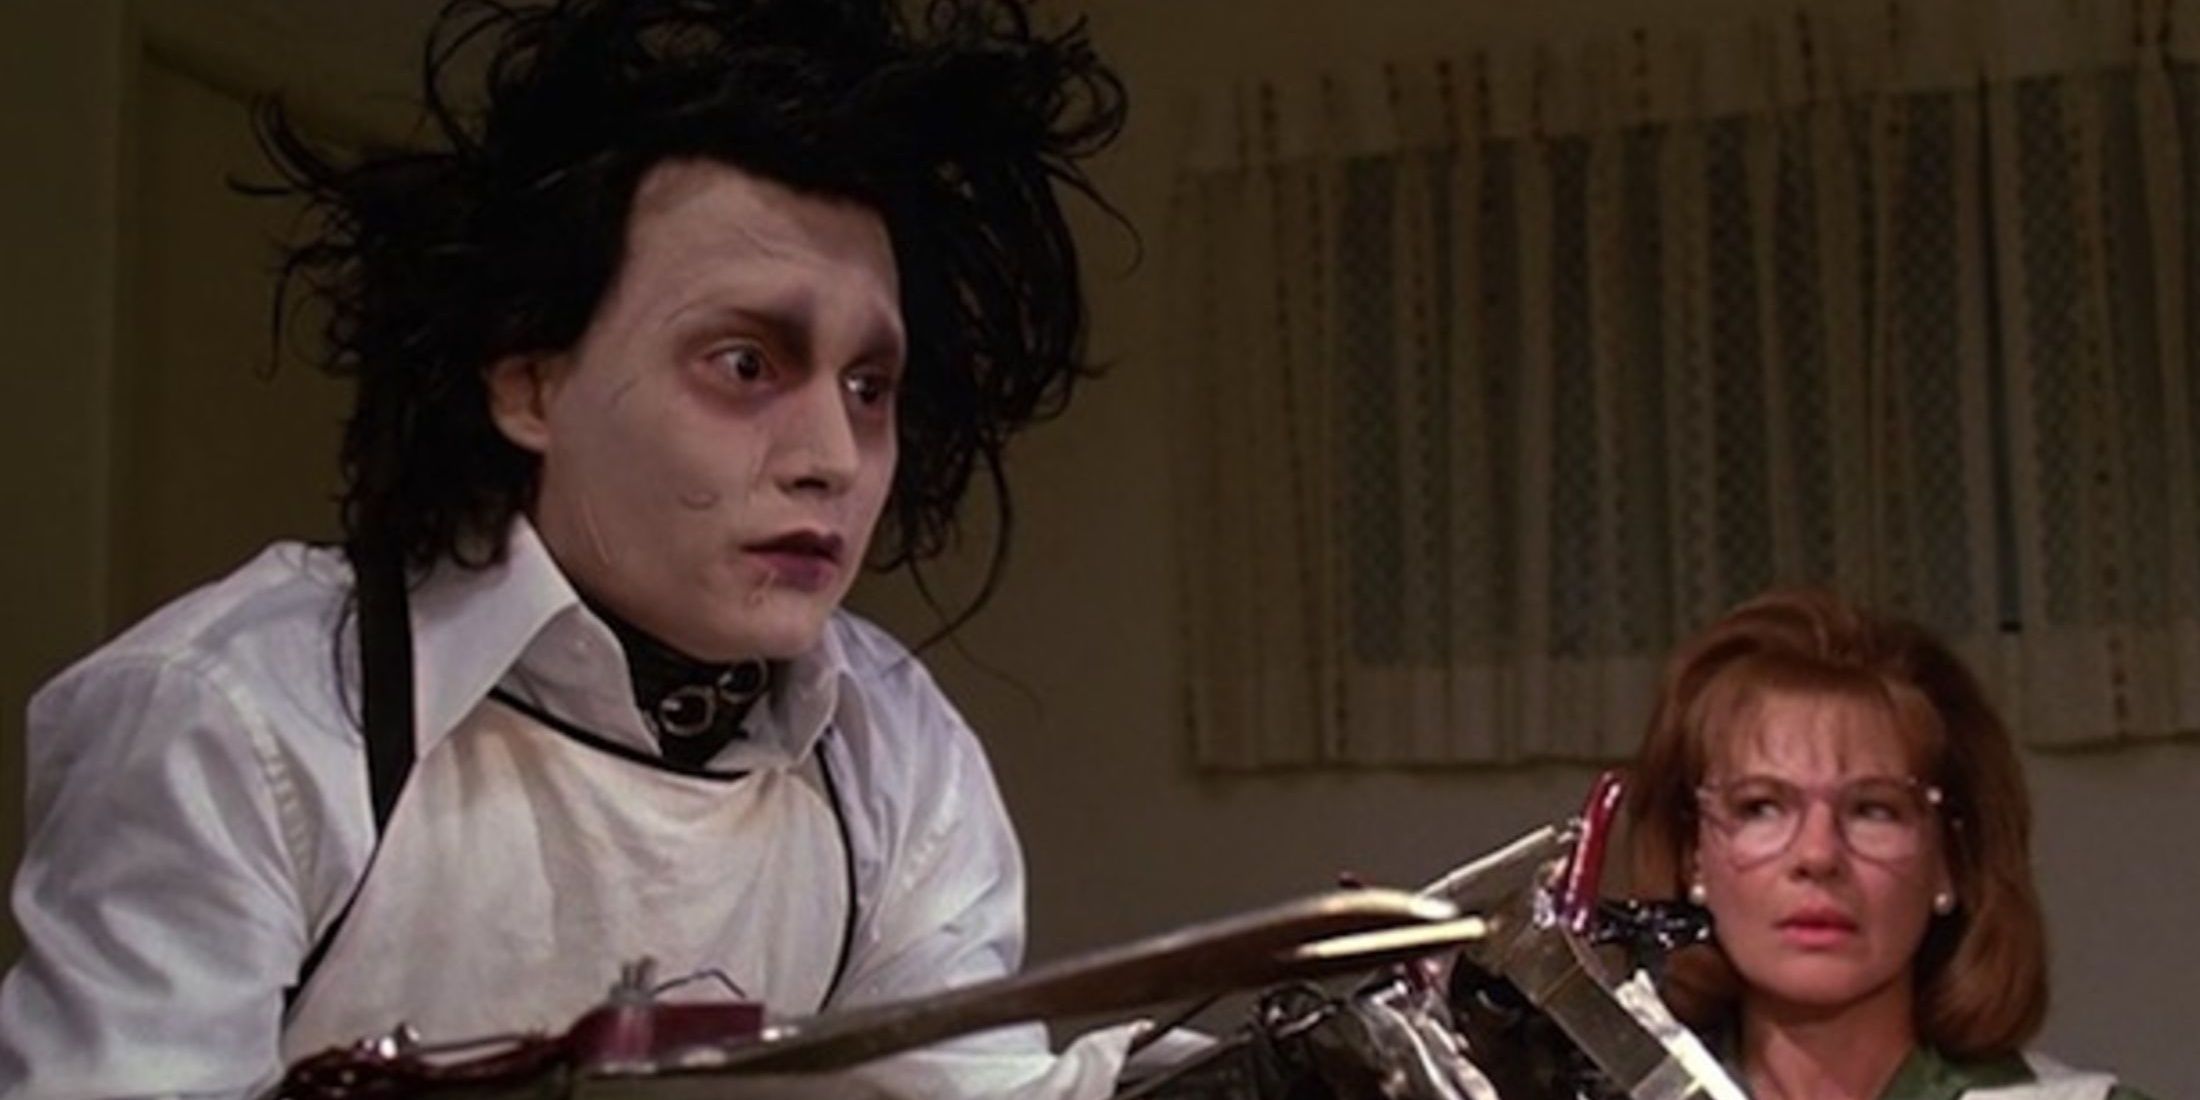 Johnny Depp as Edward Scissorhands